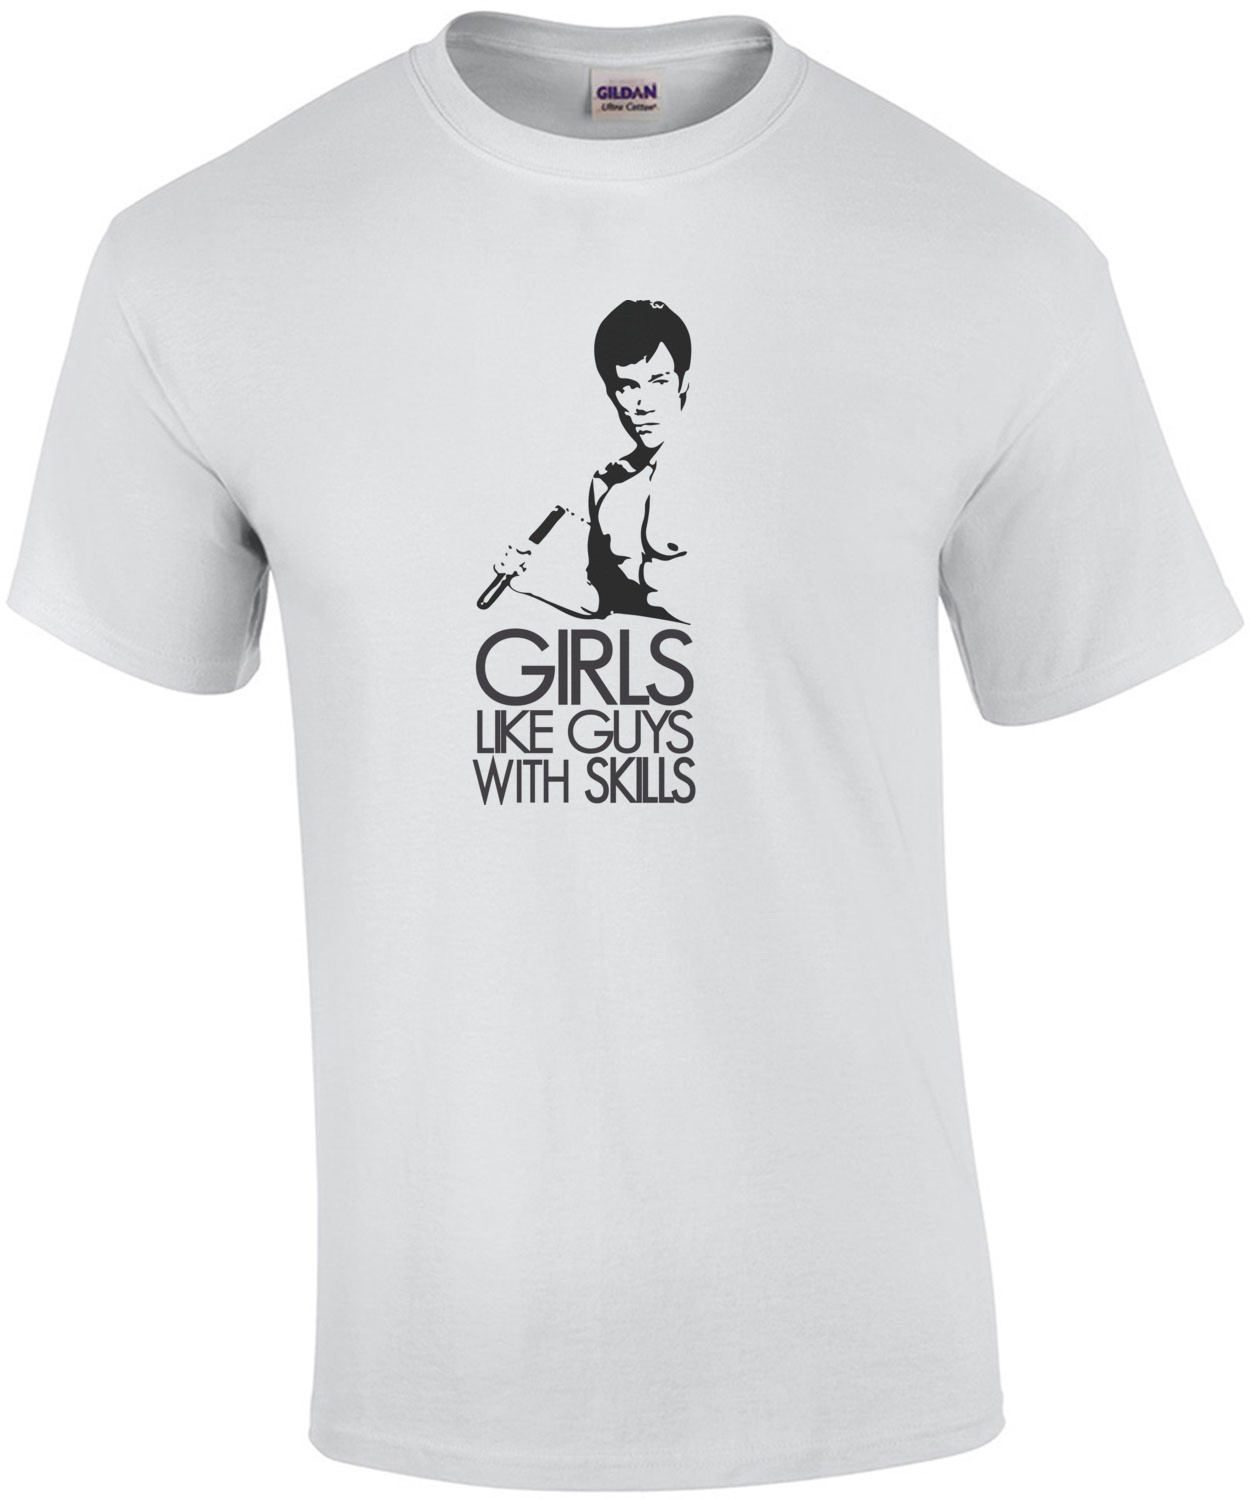 Girls like guys with skills - Bruce Lee Napoleon Dynamite T-Shirt